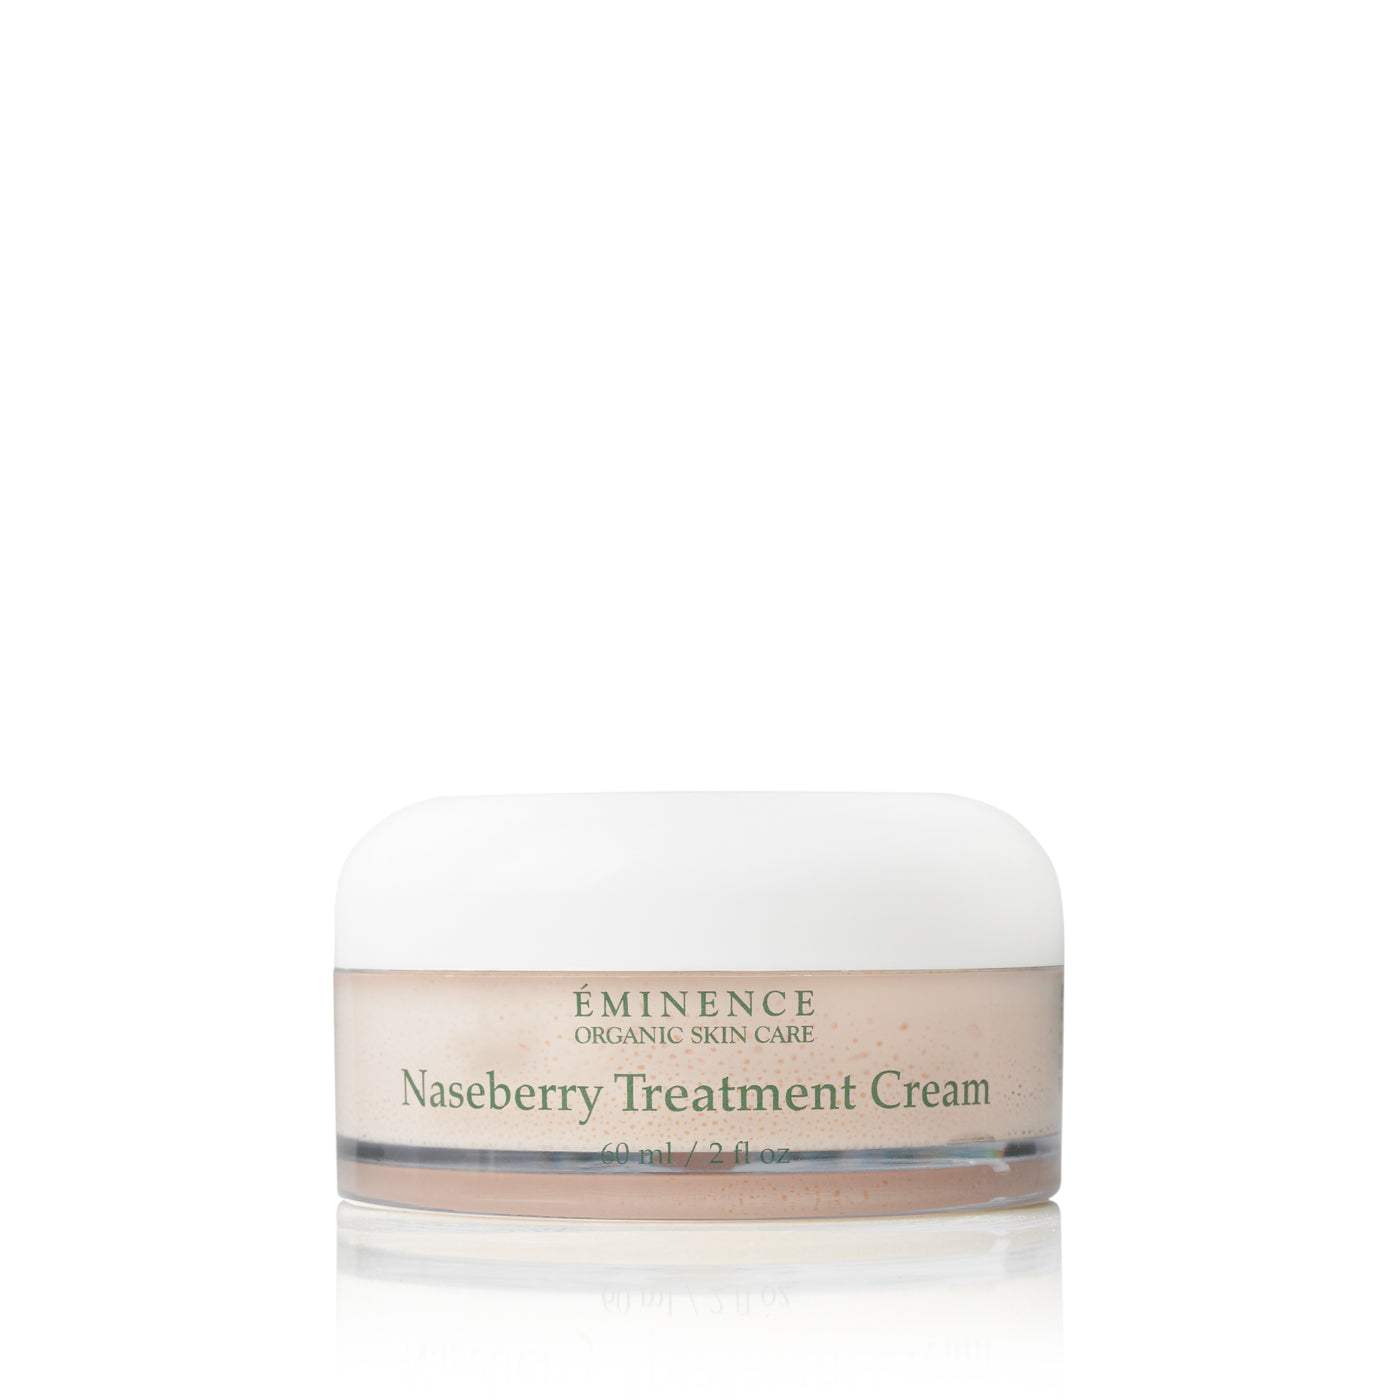 Eminence Organics Naseberry Treatment Cream - Radiance Clean Beauty